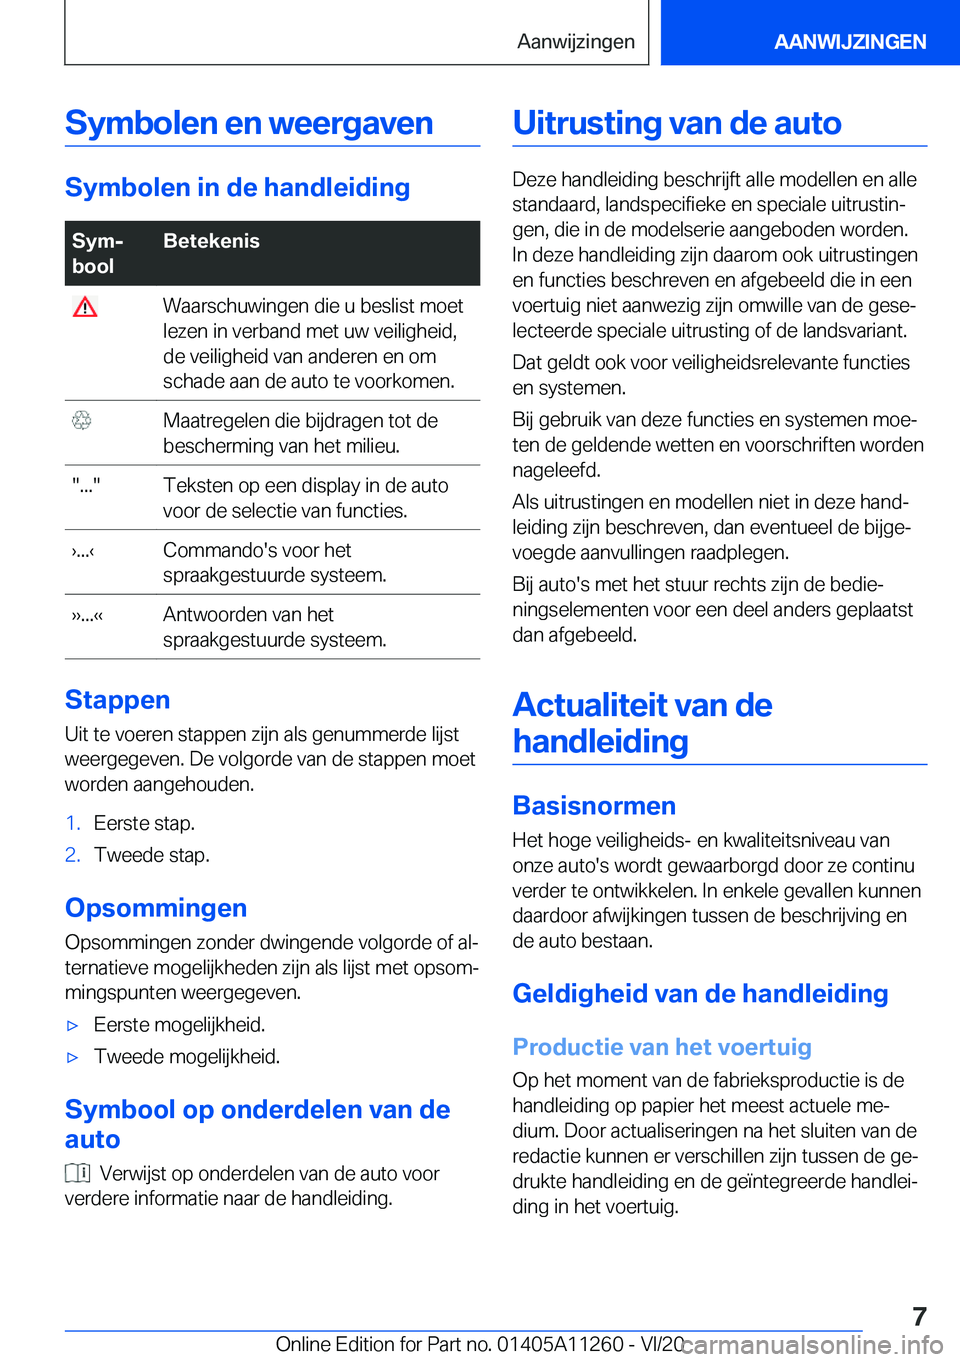 BMW 4 SERIES COUPE 2021  Instructieboekjes (in Dutch) �S�y�m�b�o�l�e�n��e�n��w�e�e�r�g�a�v�e�n
�S�y�m�b�o�l�e�n��i�n��d�e��h�a�n�d�l�e�i�d�i�n�g
�S�y�mj
�b�o�o�l�B�e�t�e�k�e�n�i�s��W�a�a�r�s�c�h�u�w�i�n�g�e�n��d�i�e��u��b�e�s�l�i�s�t��m�o�e�t
